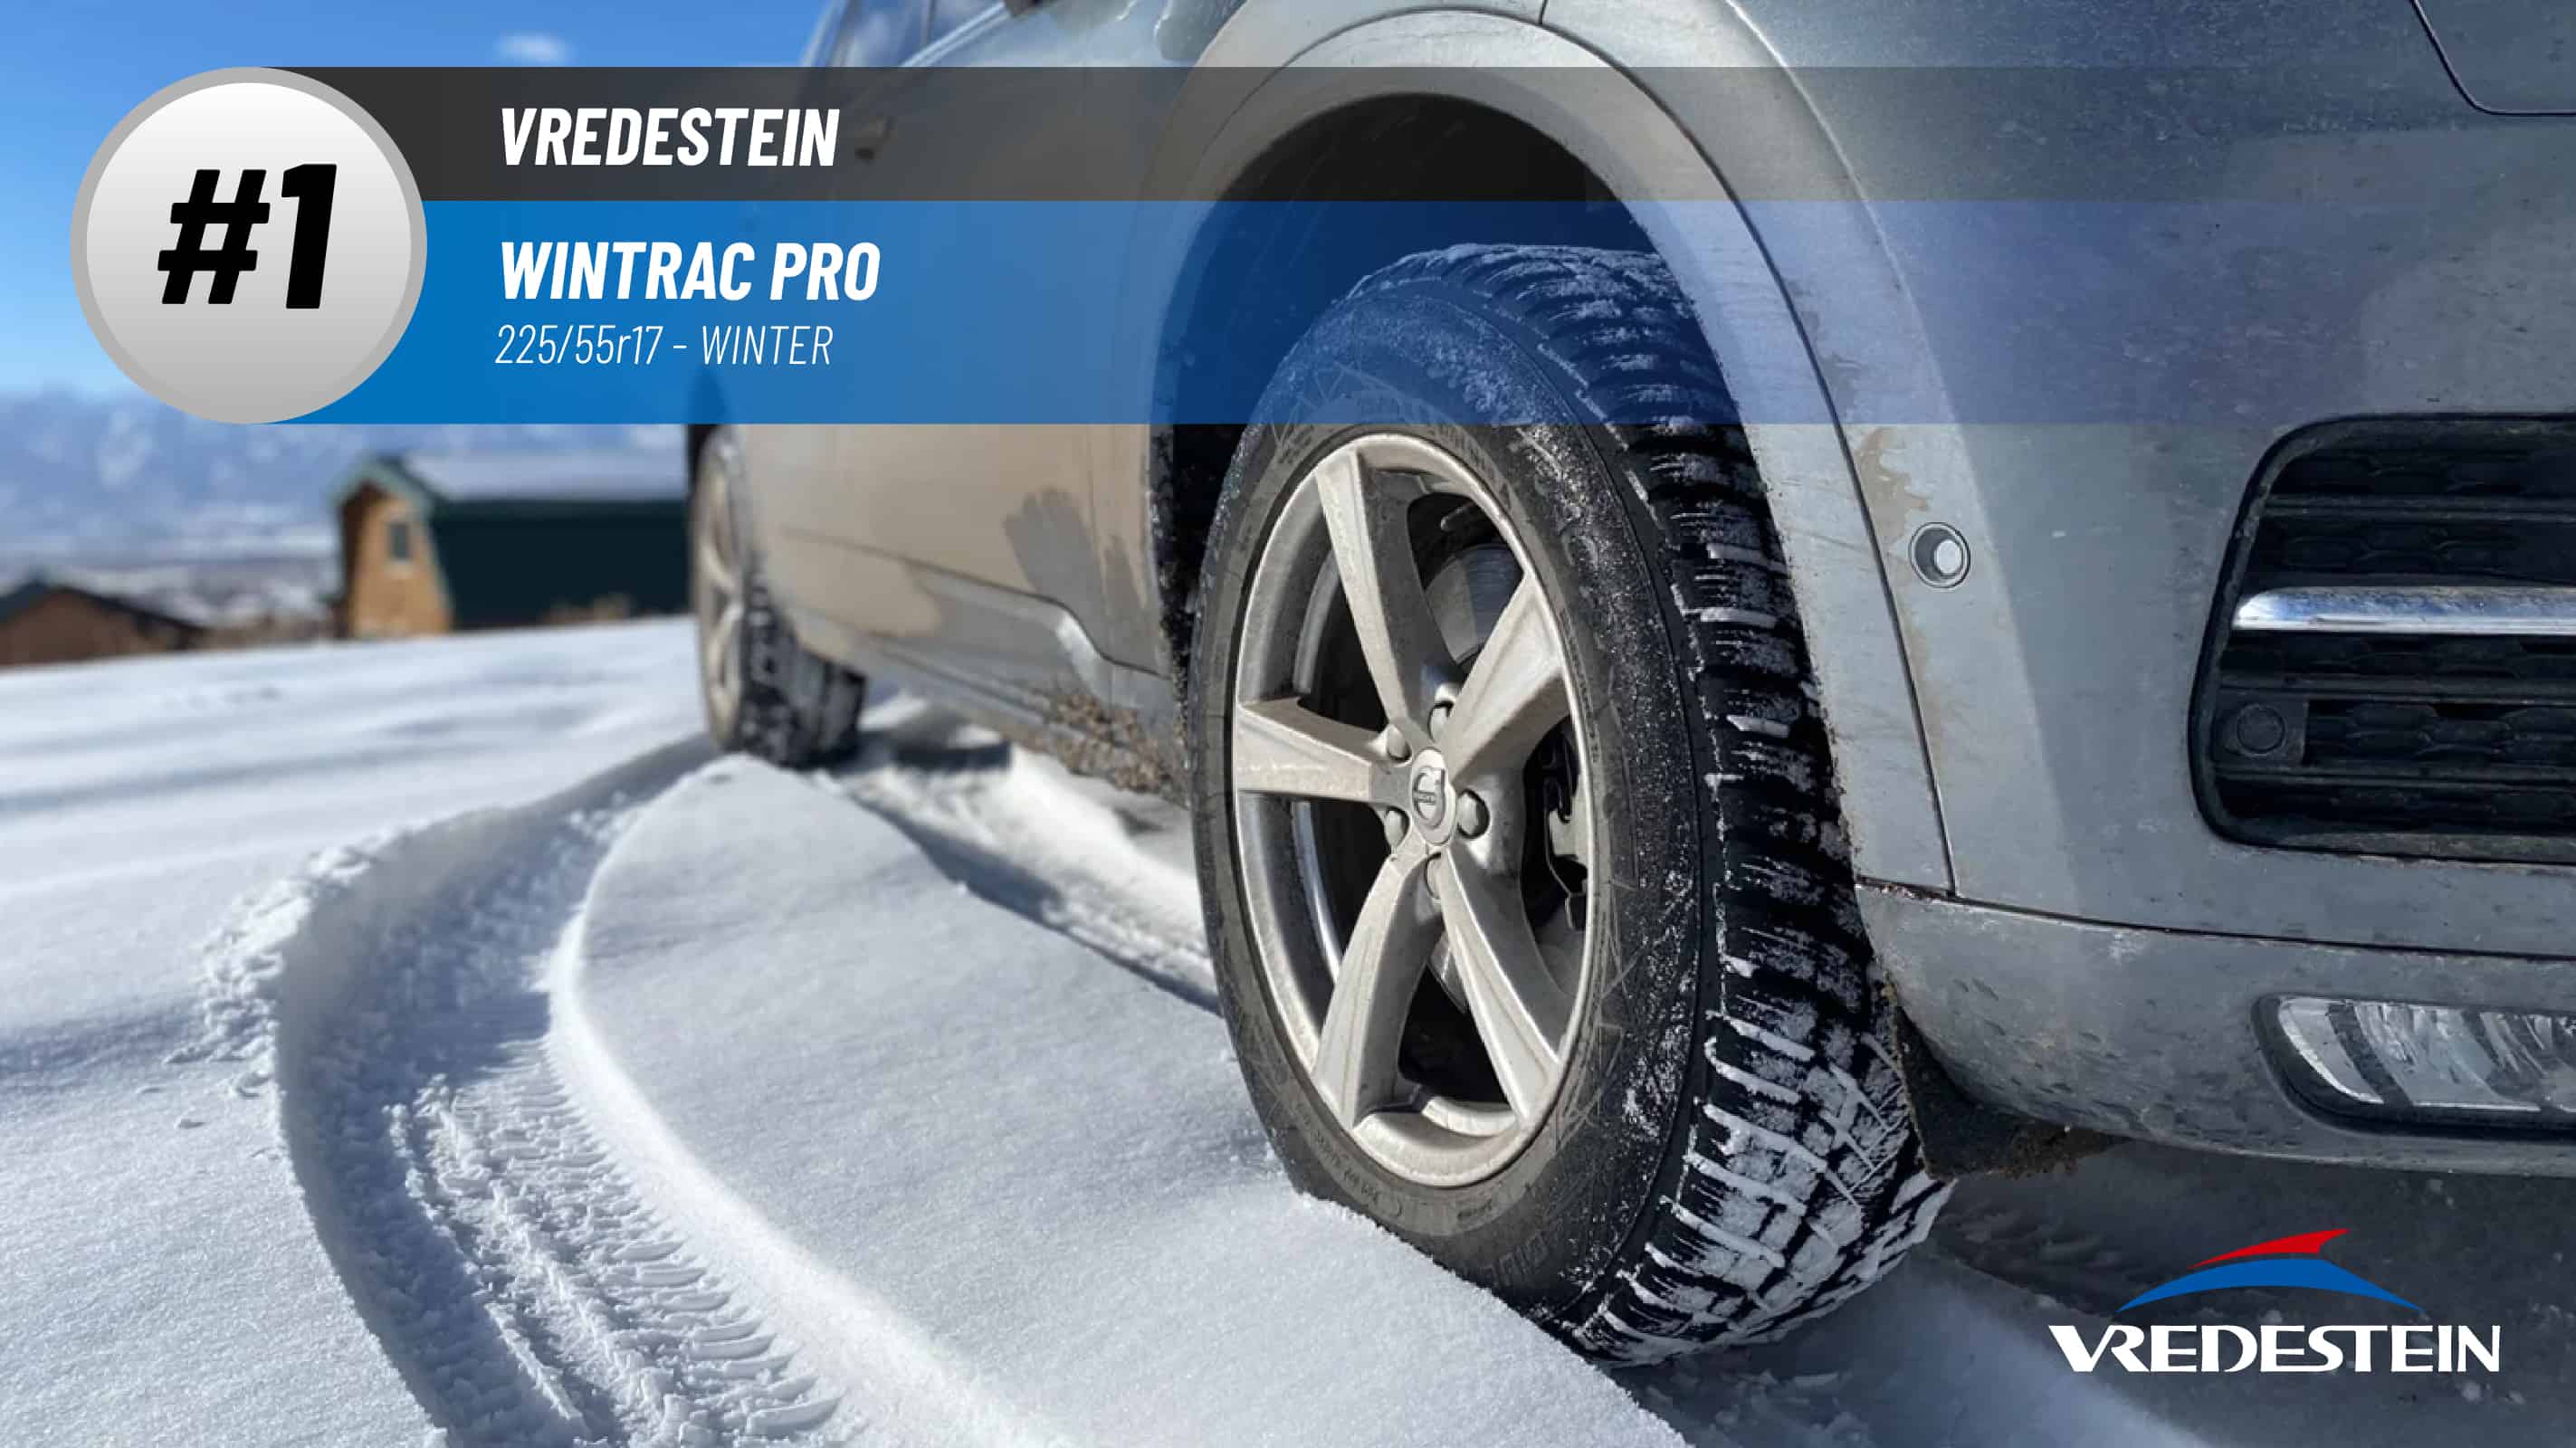 Top #1 Winter Tires: Vredestein Wintrac Pro – 225/55R17